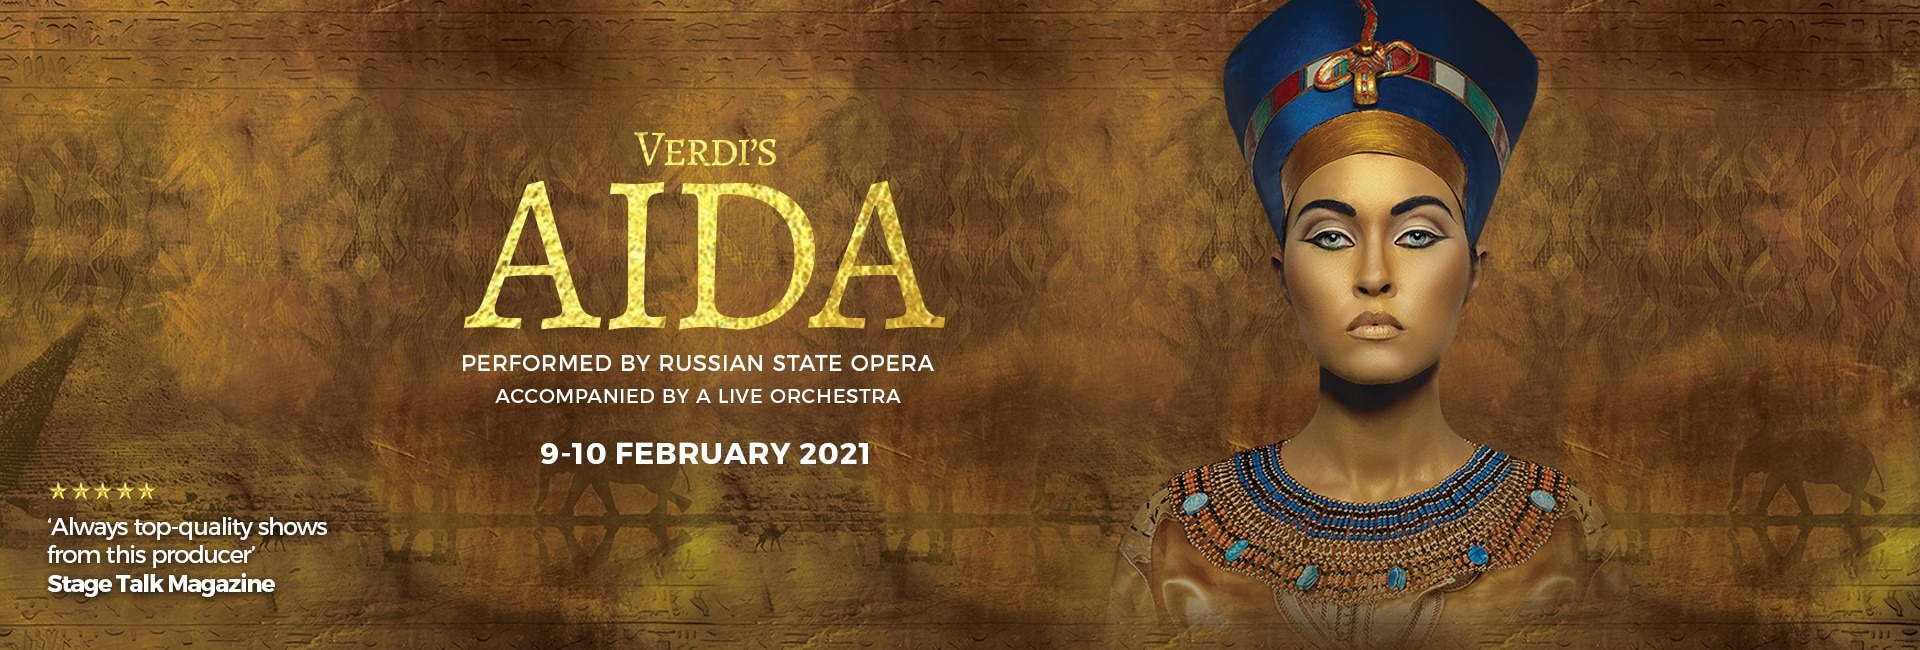 Verdi’s Aida - Coming Soon in UAE